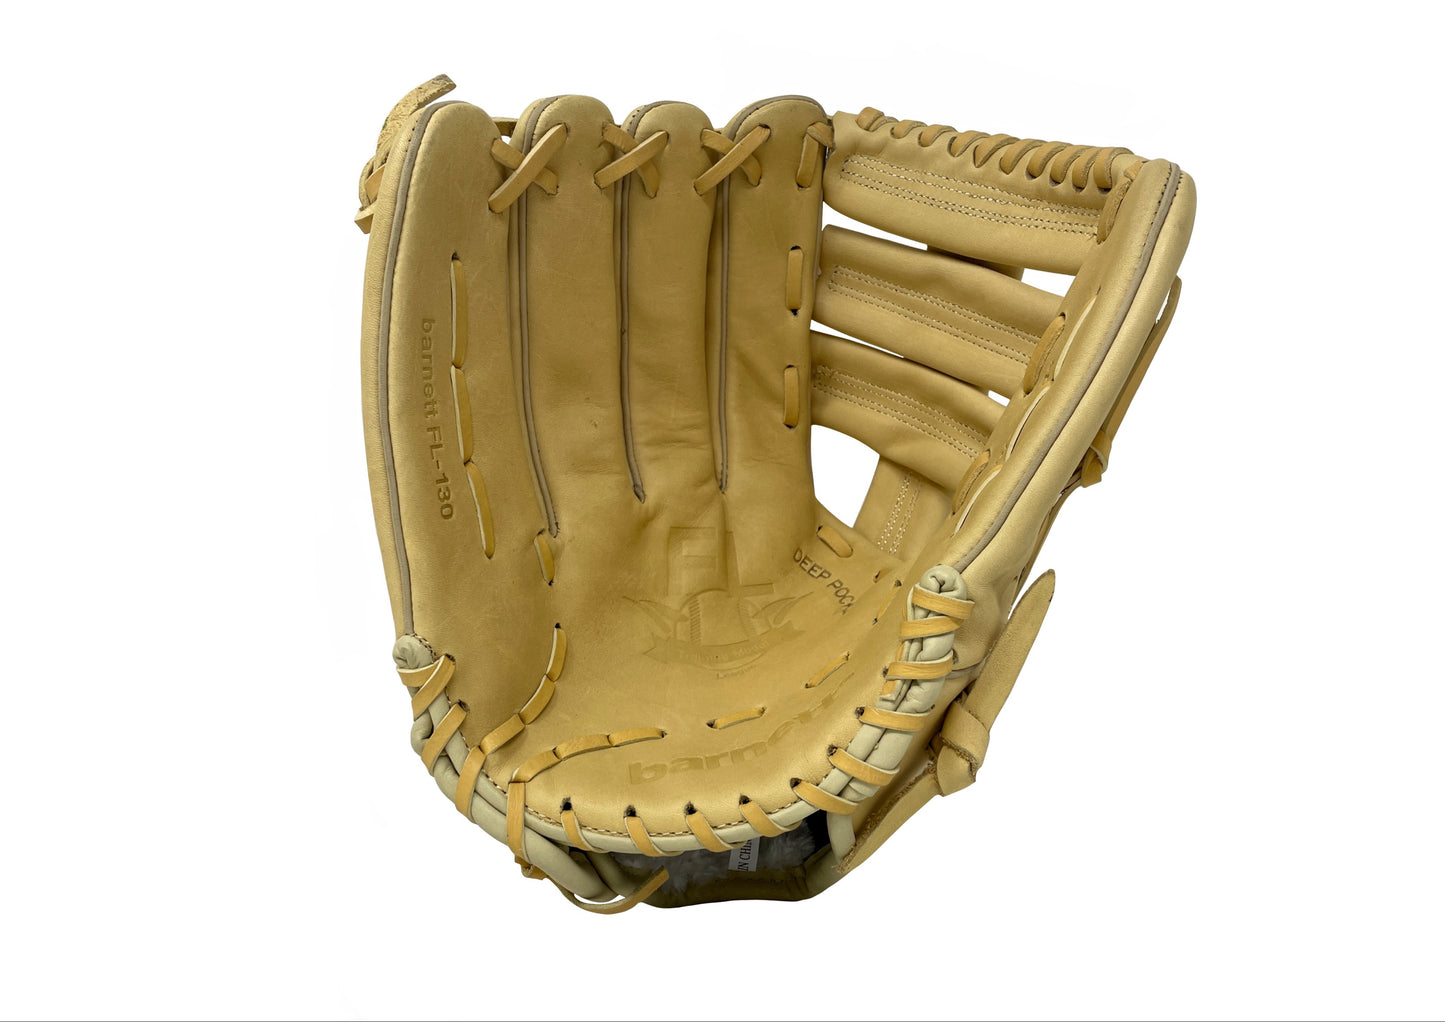 FL-130 Professional baseball glove, full grain leather, outfield, Softball, 13'', Beige